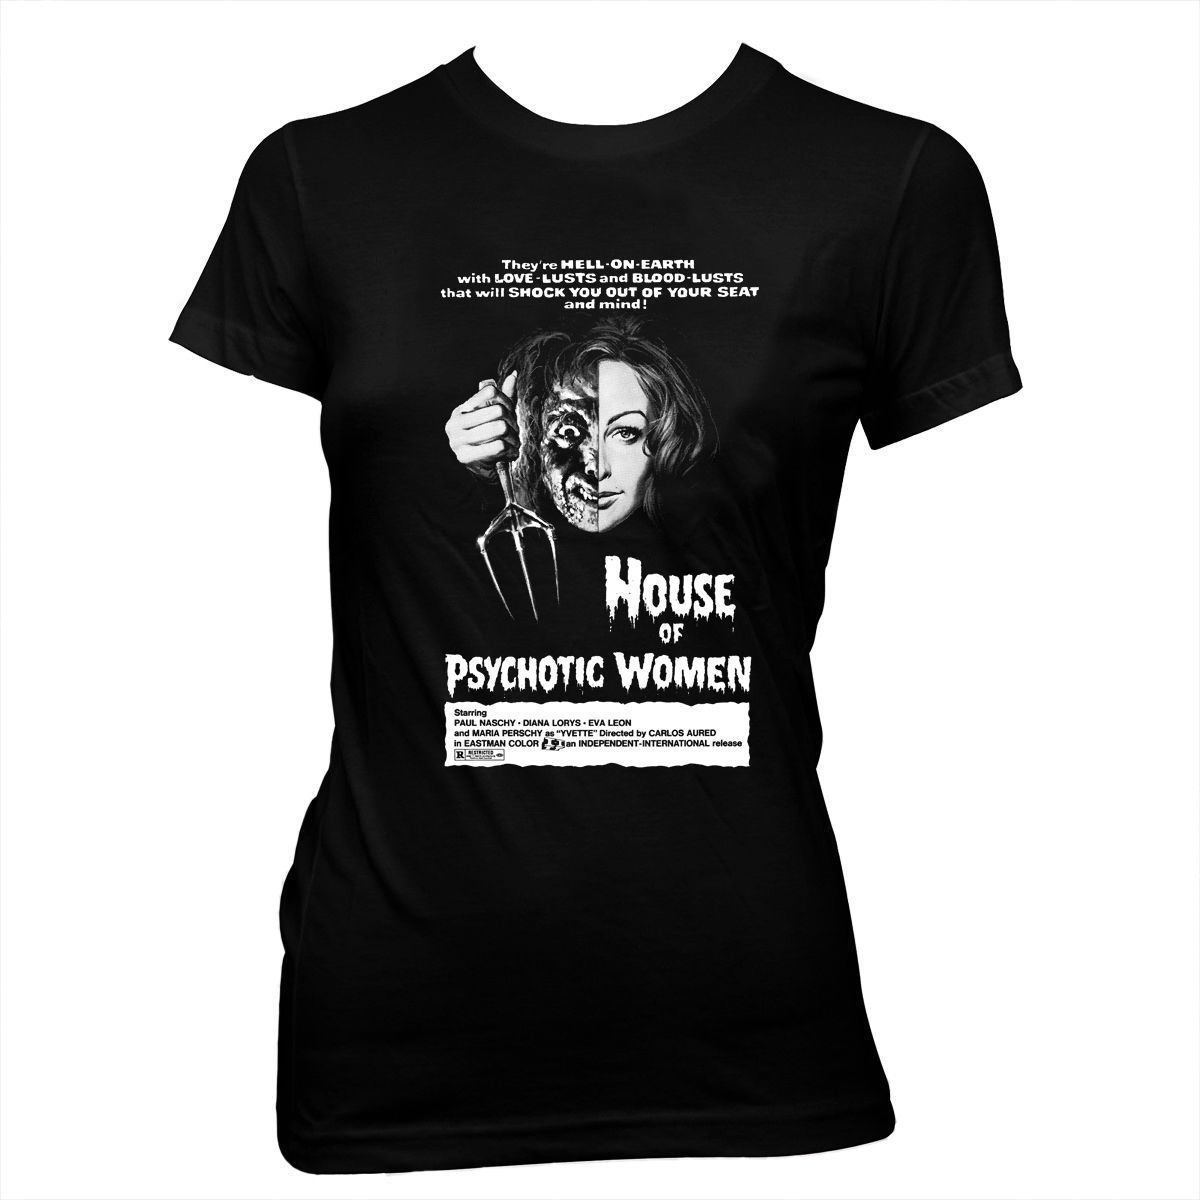 House of Psychotic Women - 70s Horror -Women's Hand screened 100% cotton t-shirt